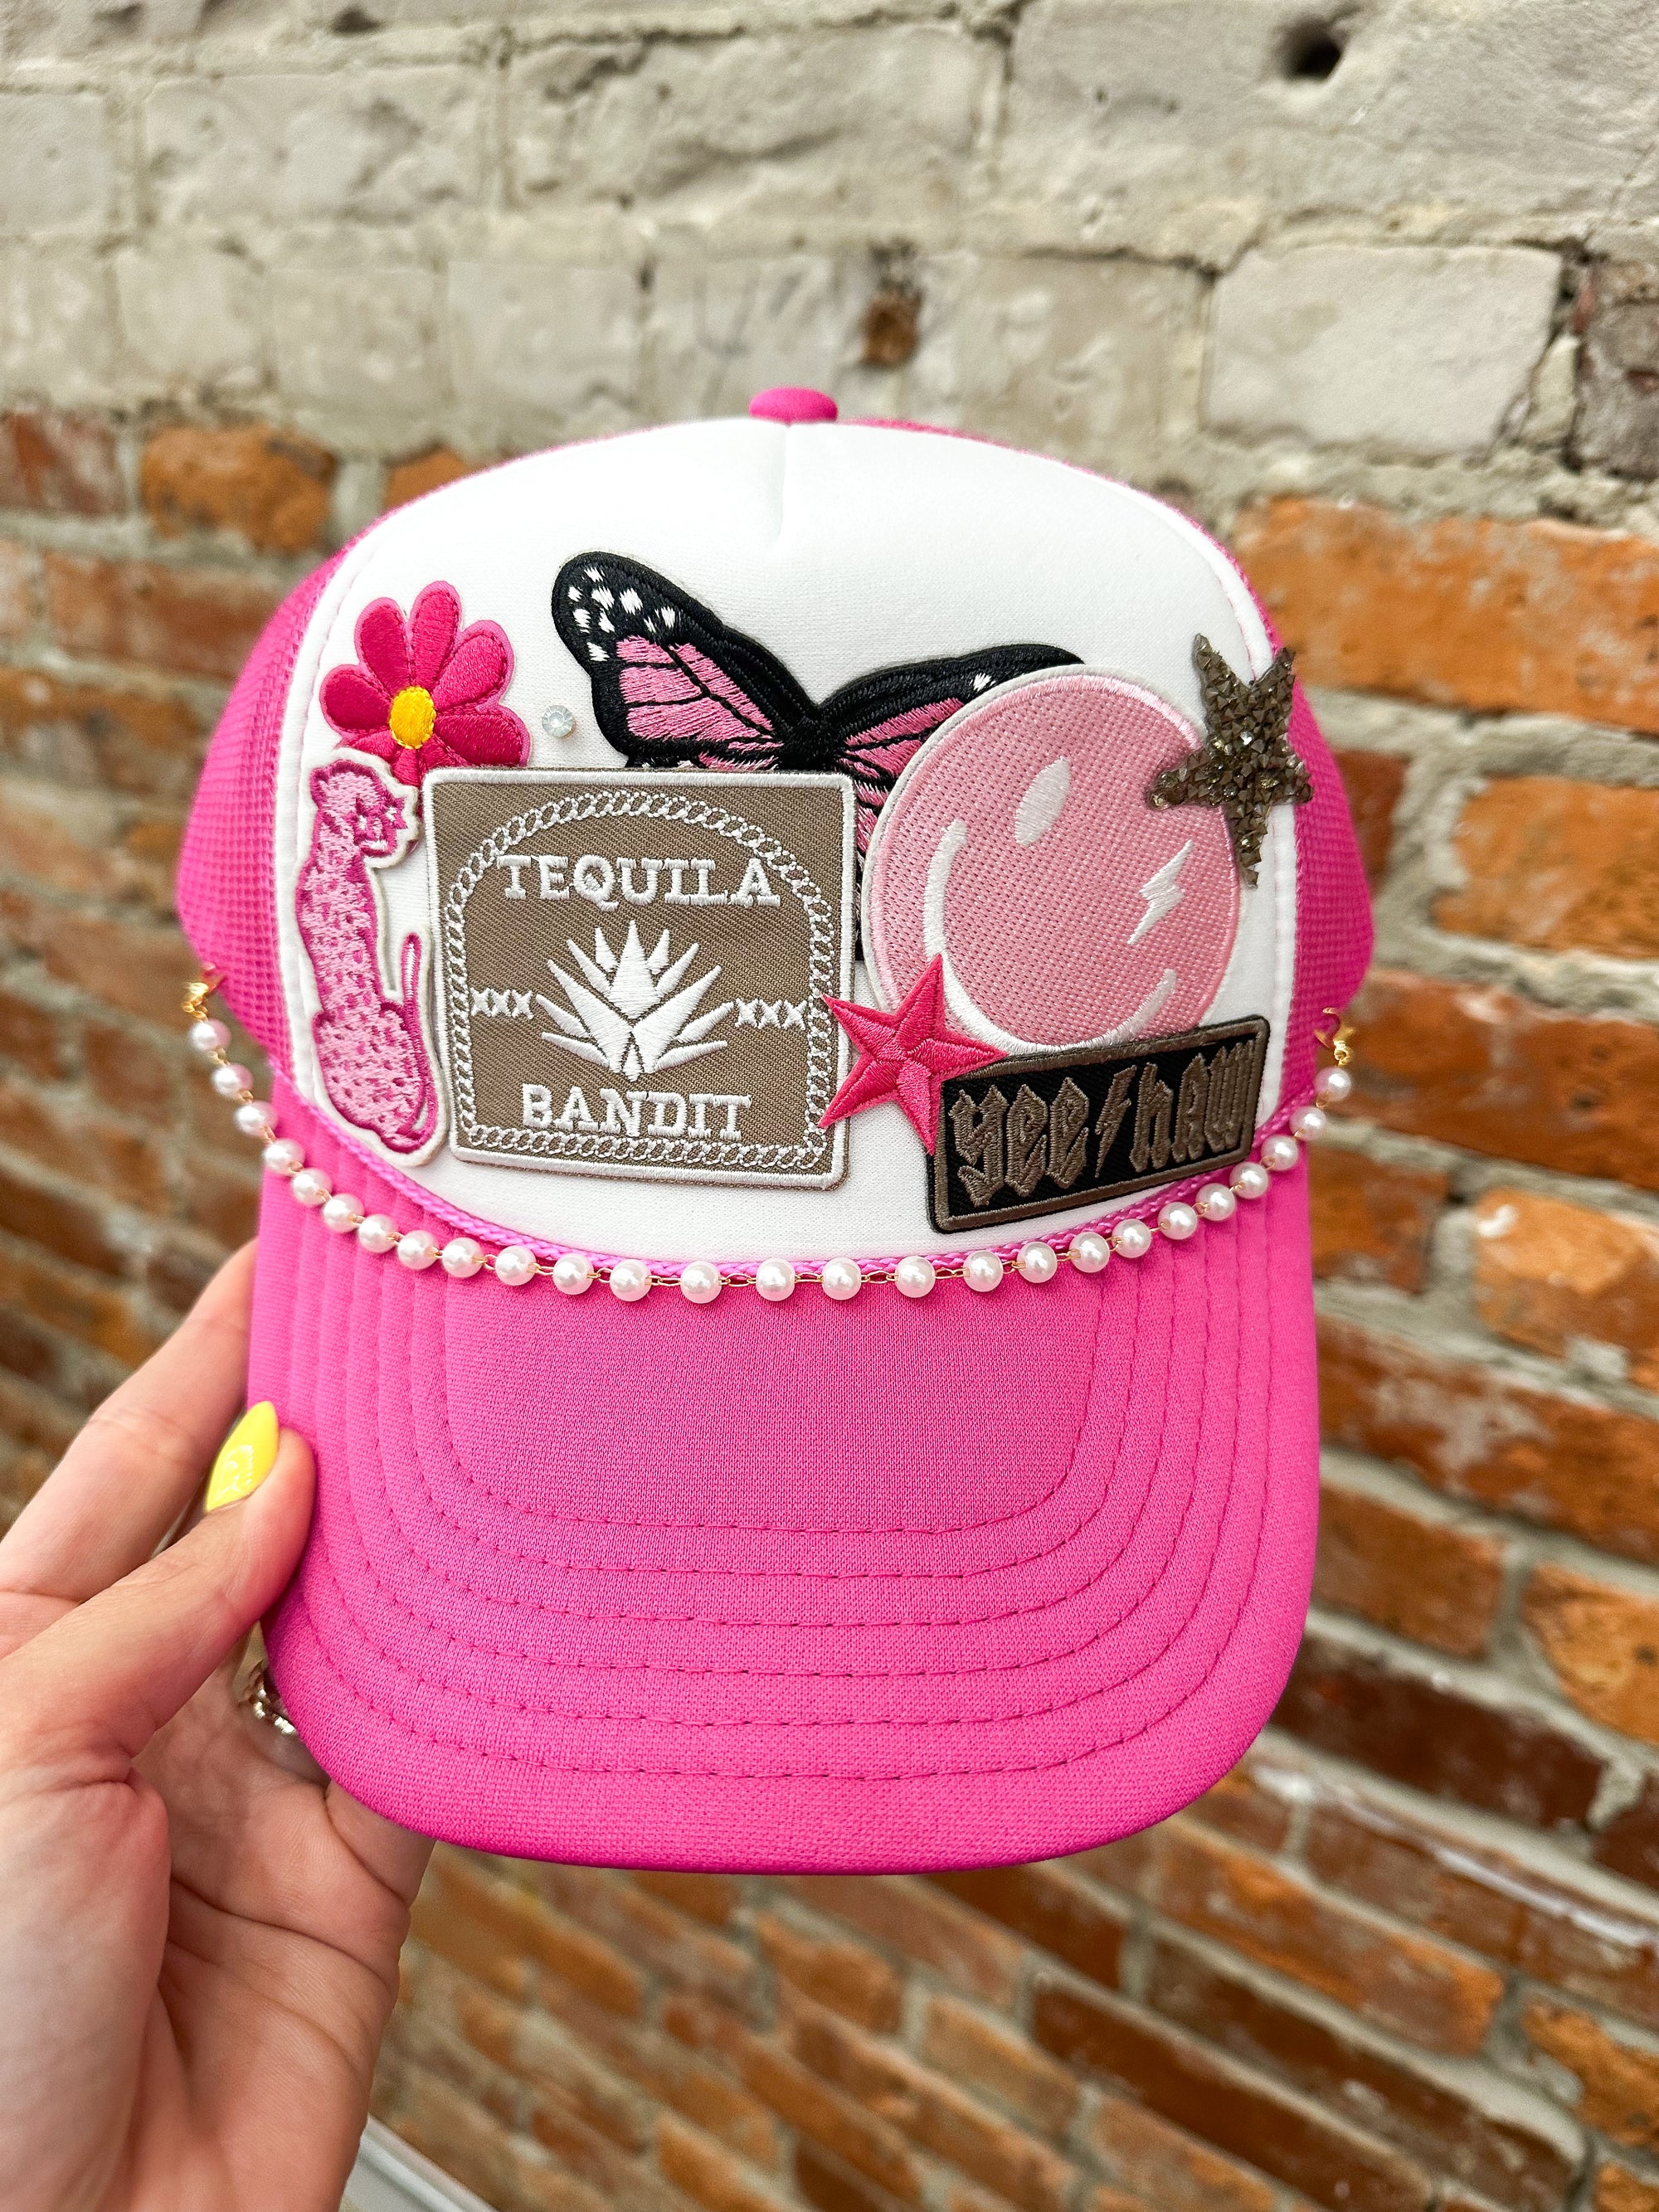 Pre-Made Tequila Bandit Trucker Hat